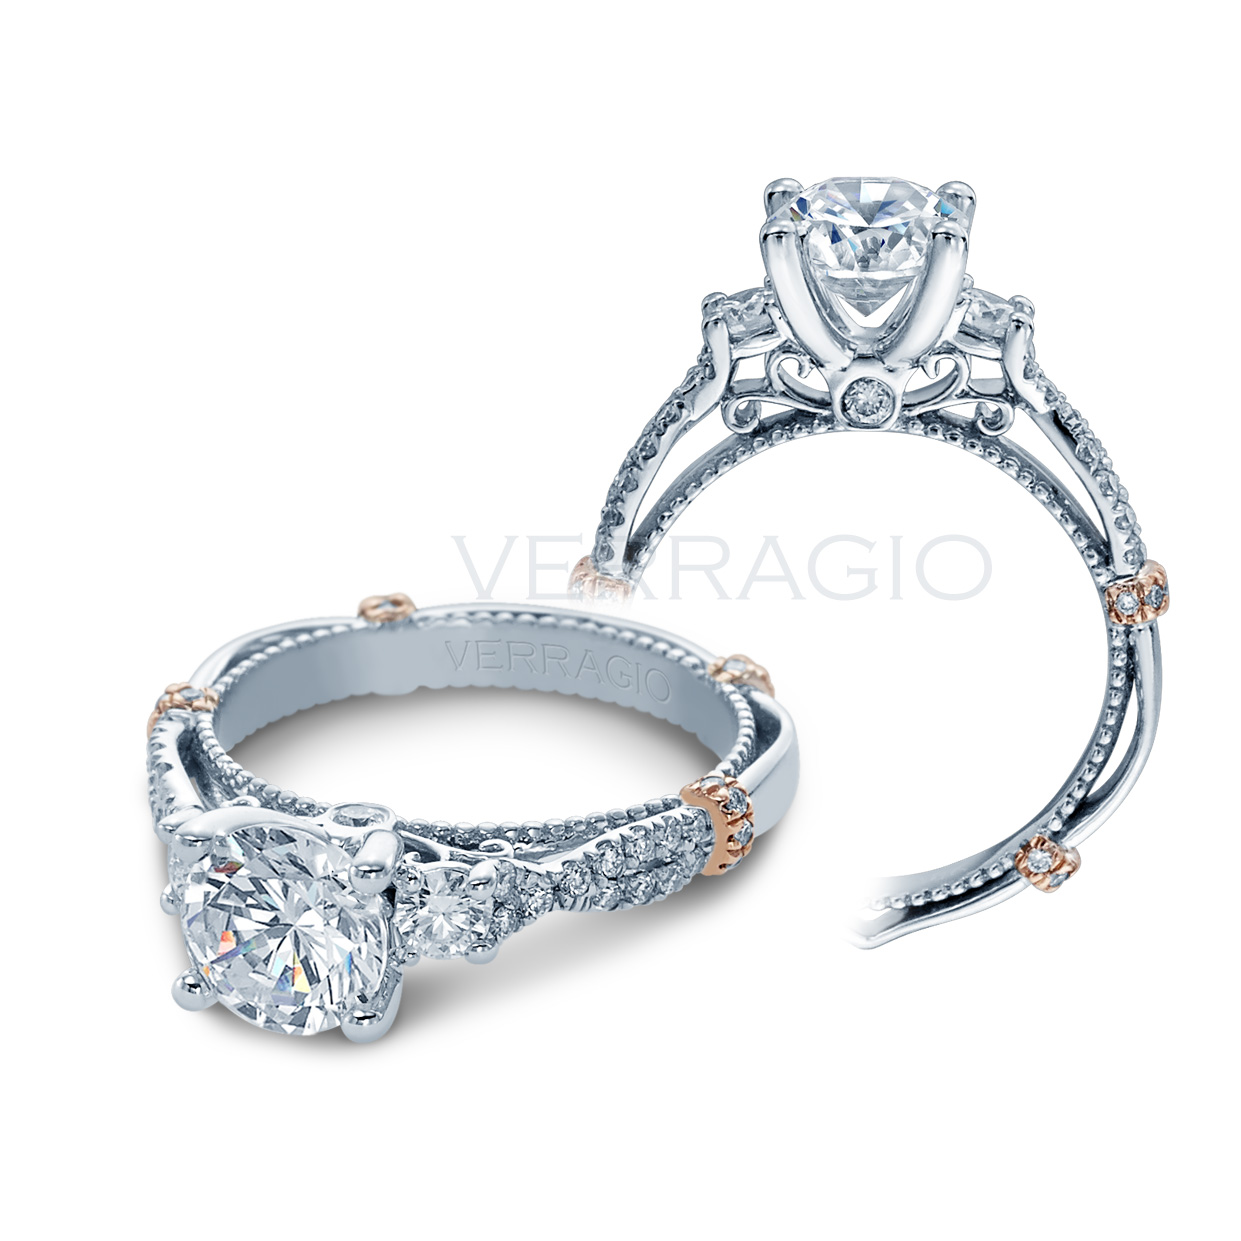 Gorgeous Verragio Diamond Engagement Ring!